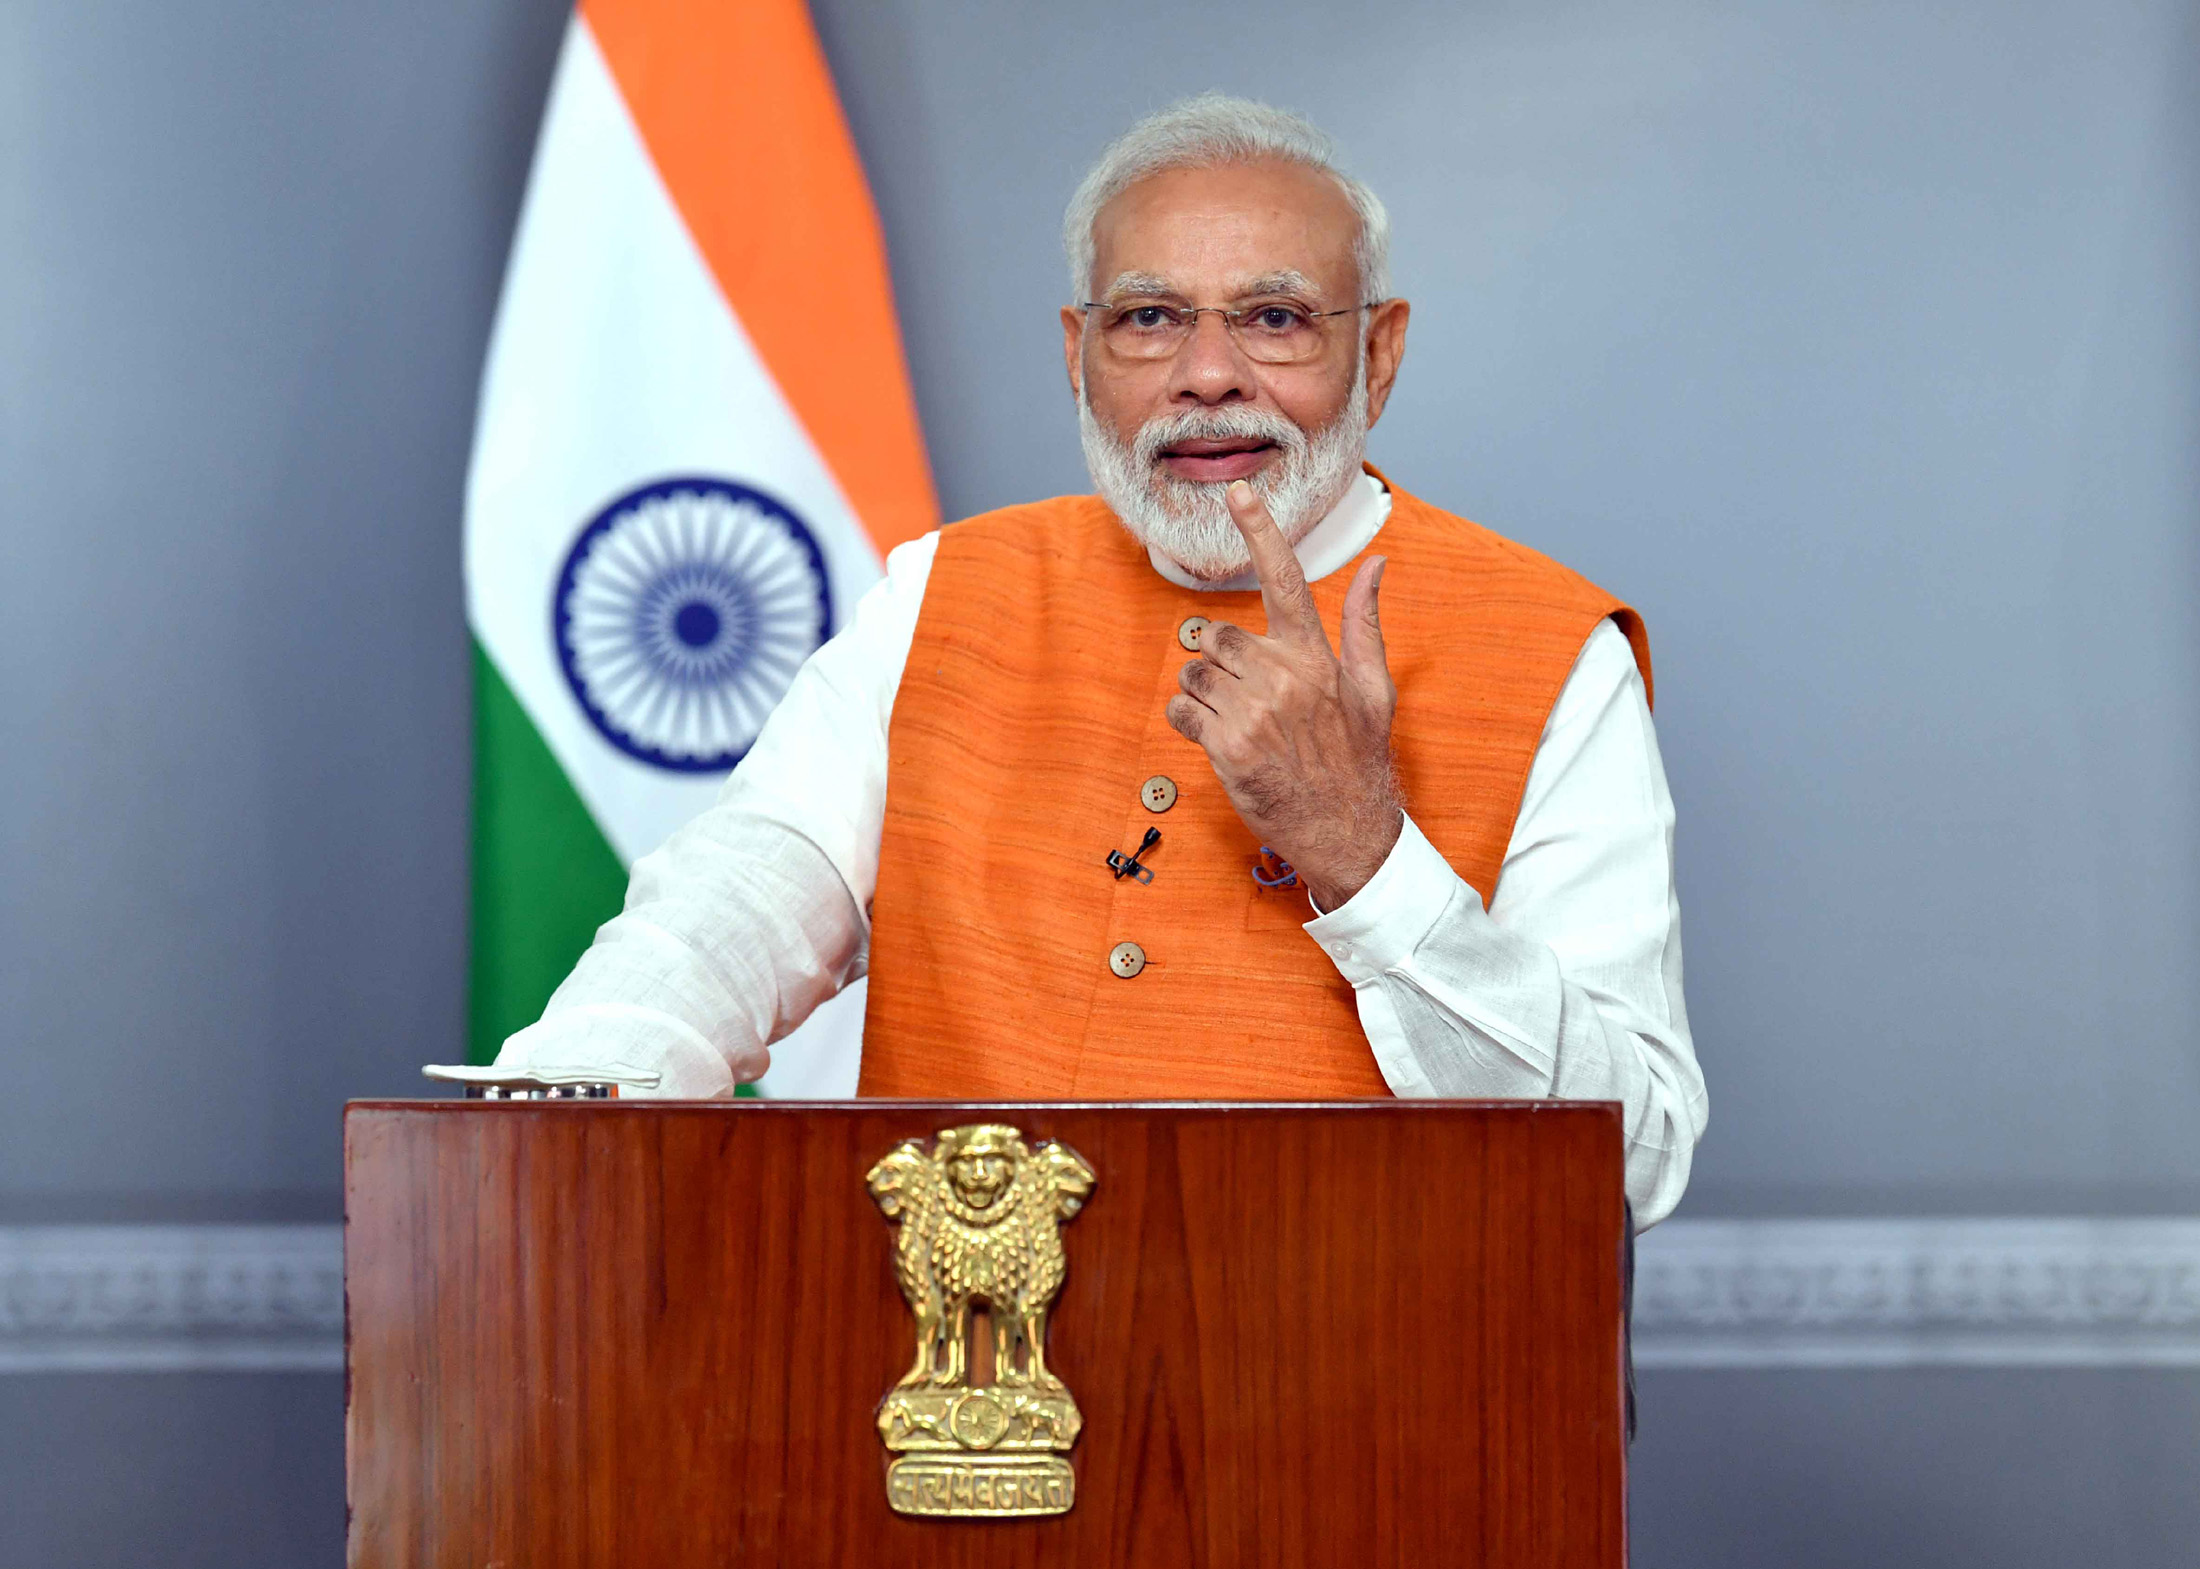 The Prime Minister, Shri Narendra Modi addressing the Malayala Manorama News Conclave 2019 in Kochi via video conferencing, in New Delhi on August 30, 2019.